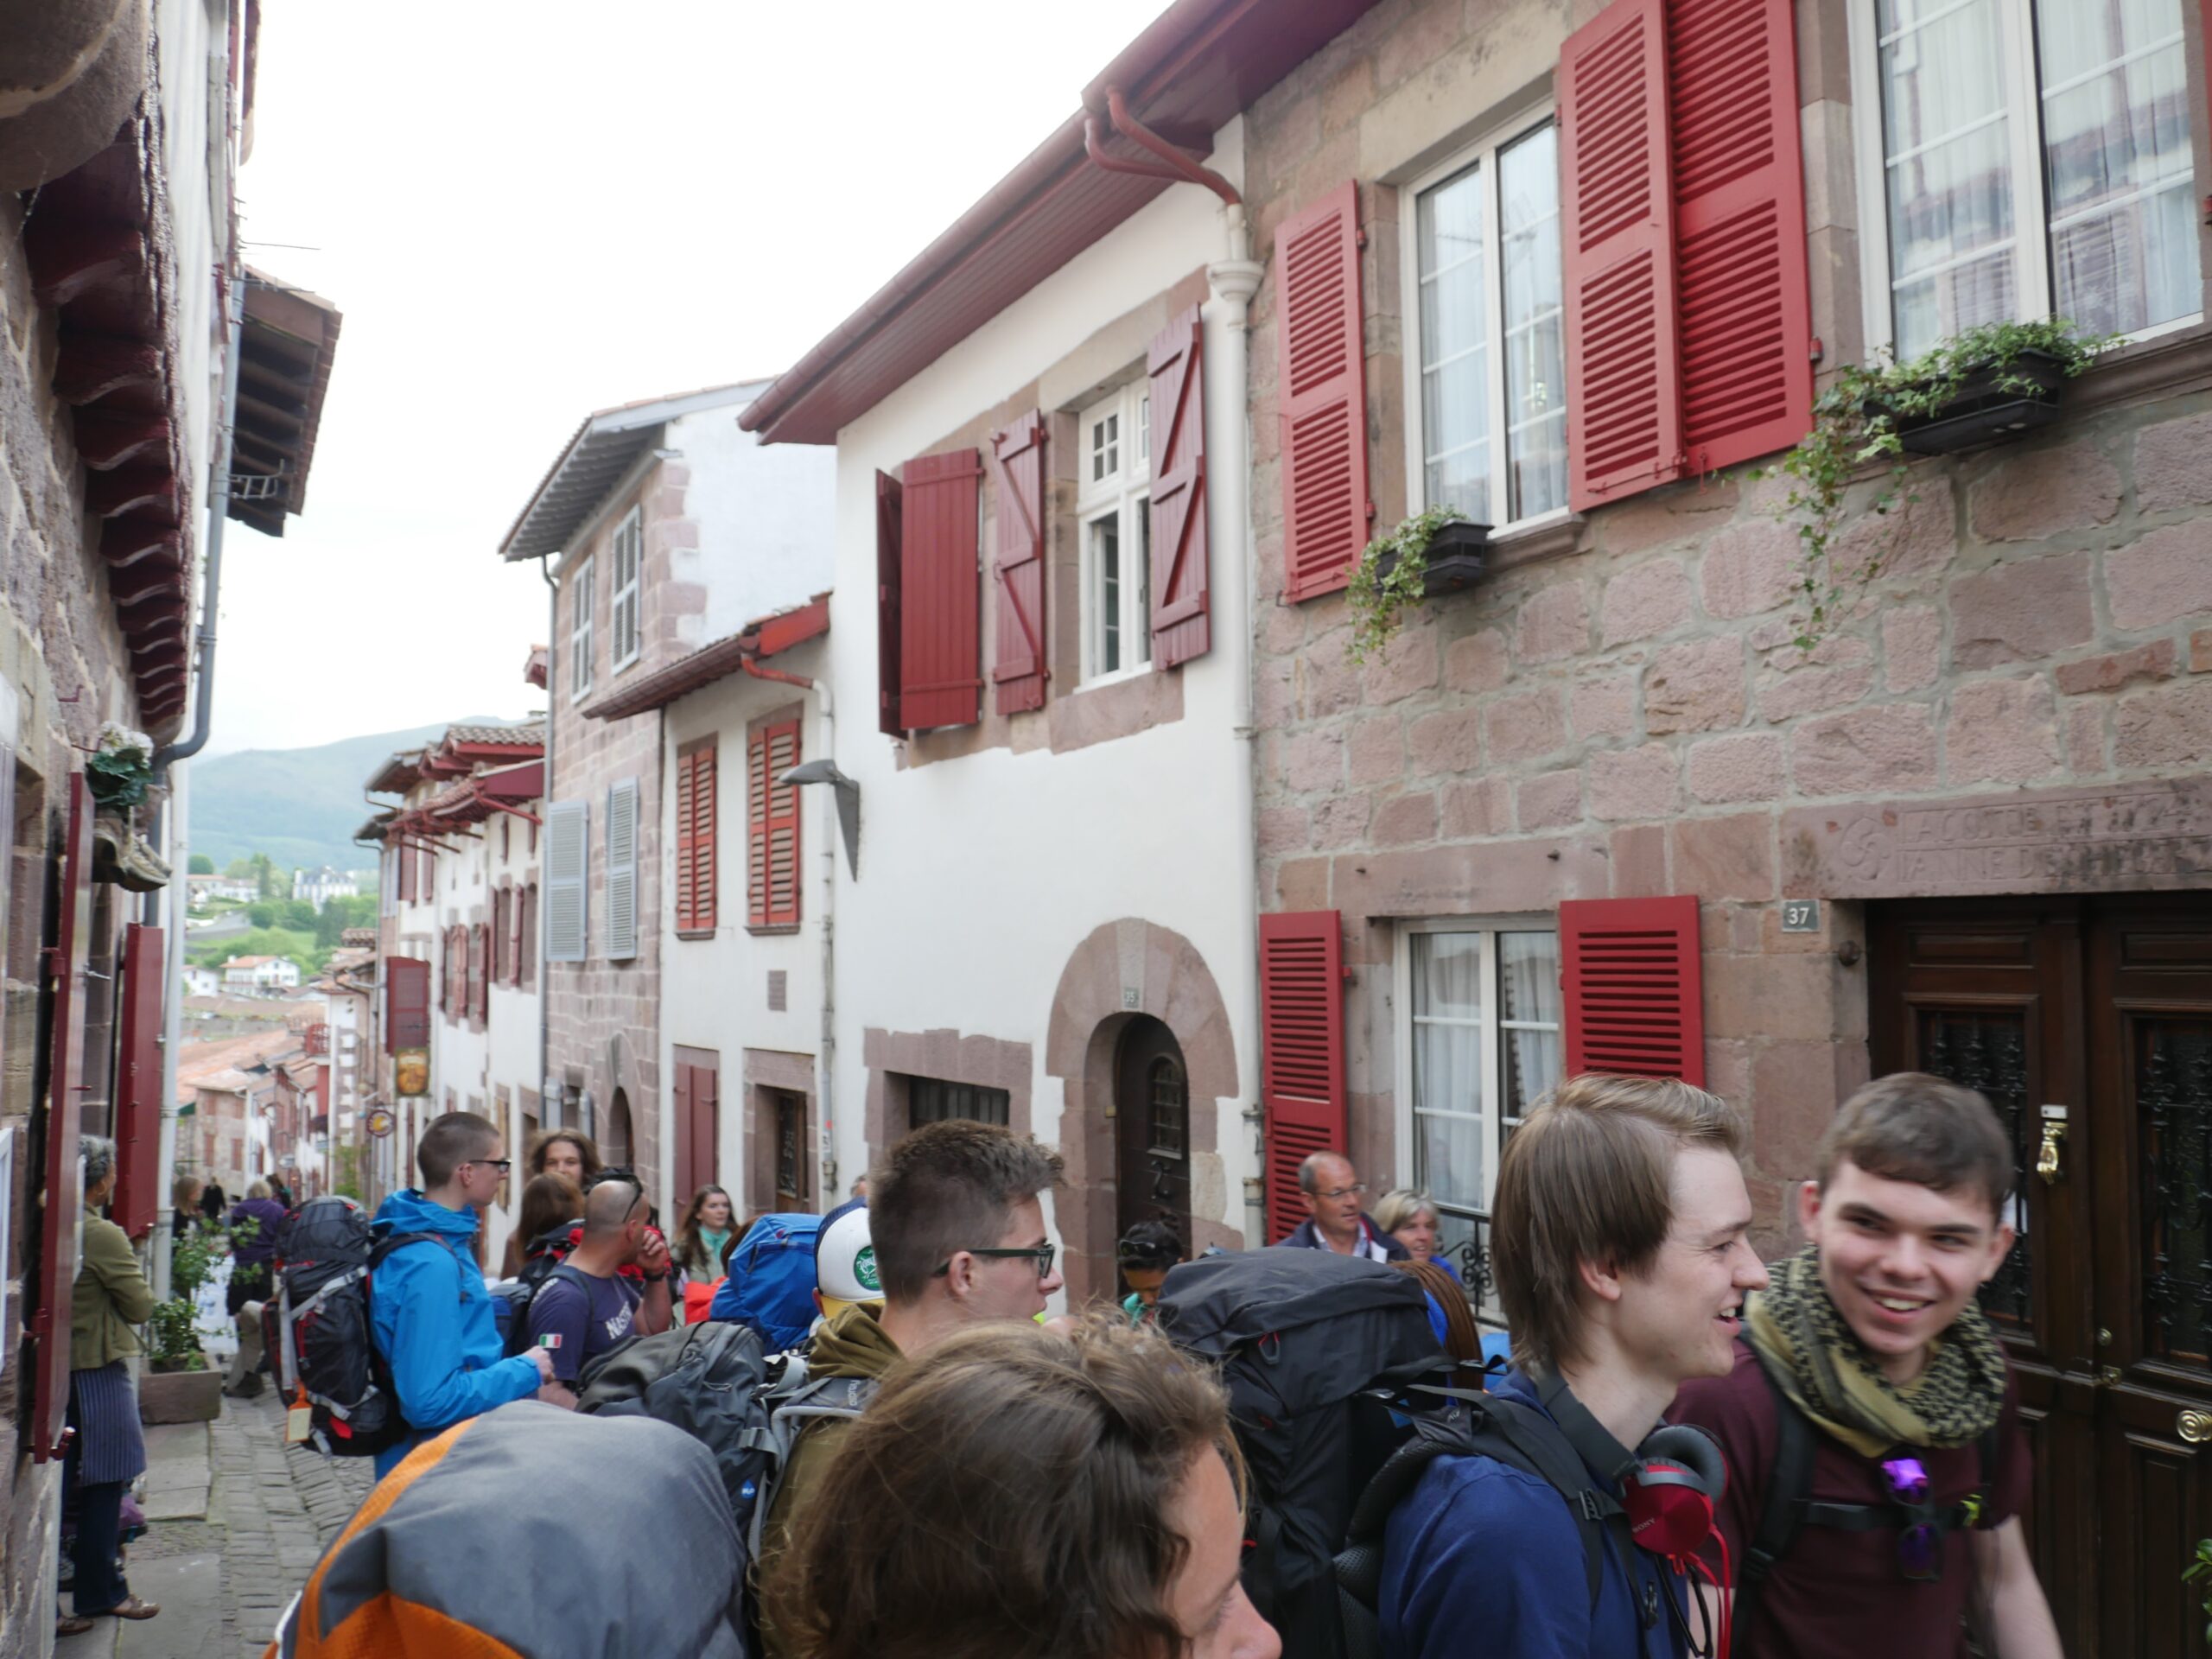 Pilgrims wait in line in Saint-Jean-Pied-de-Port, France to obtain their pilgrim's passport before beginning their trip on the Camino de Santiago.